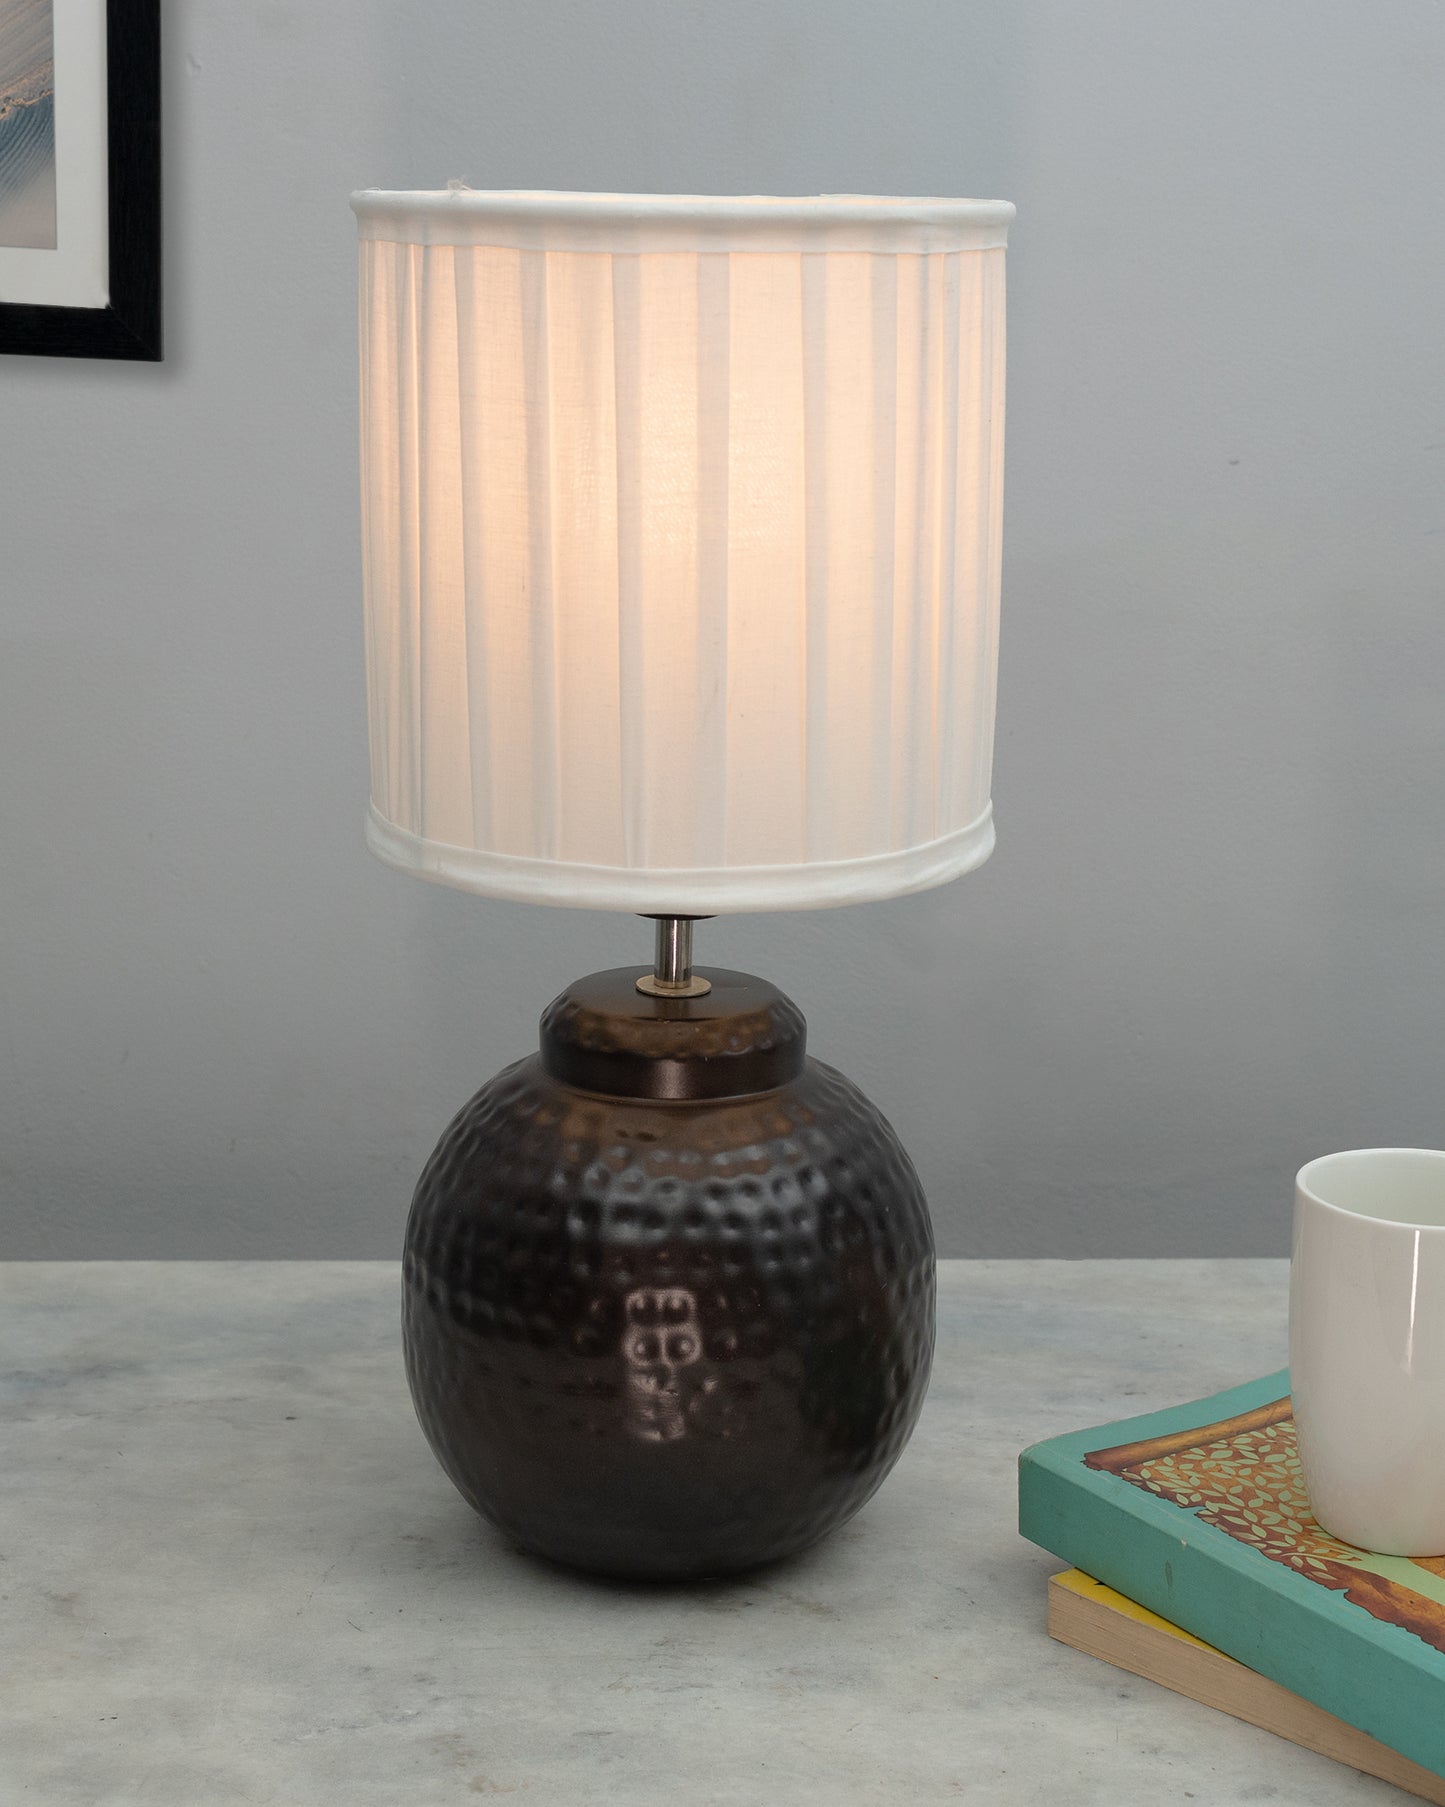 Ginger Jar Antique Table Lamp Hammered Antique Copper Metal for Living Room Family Bedroom